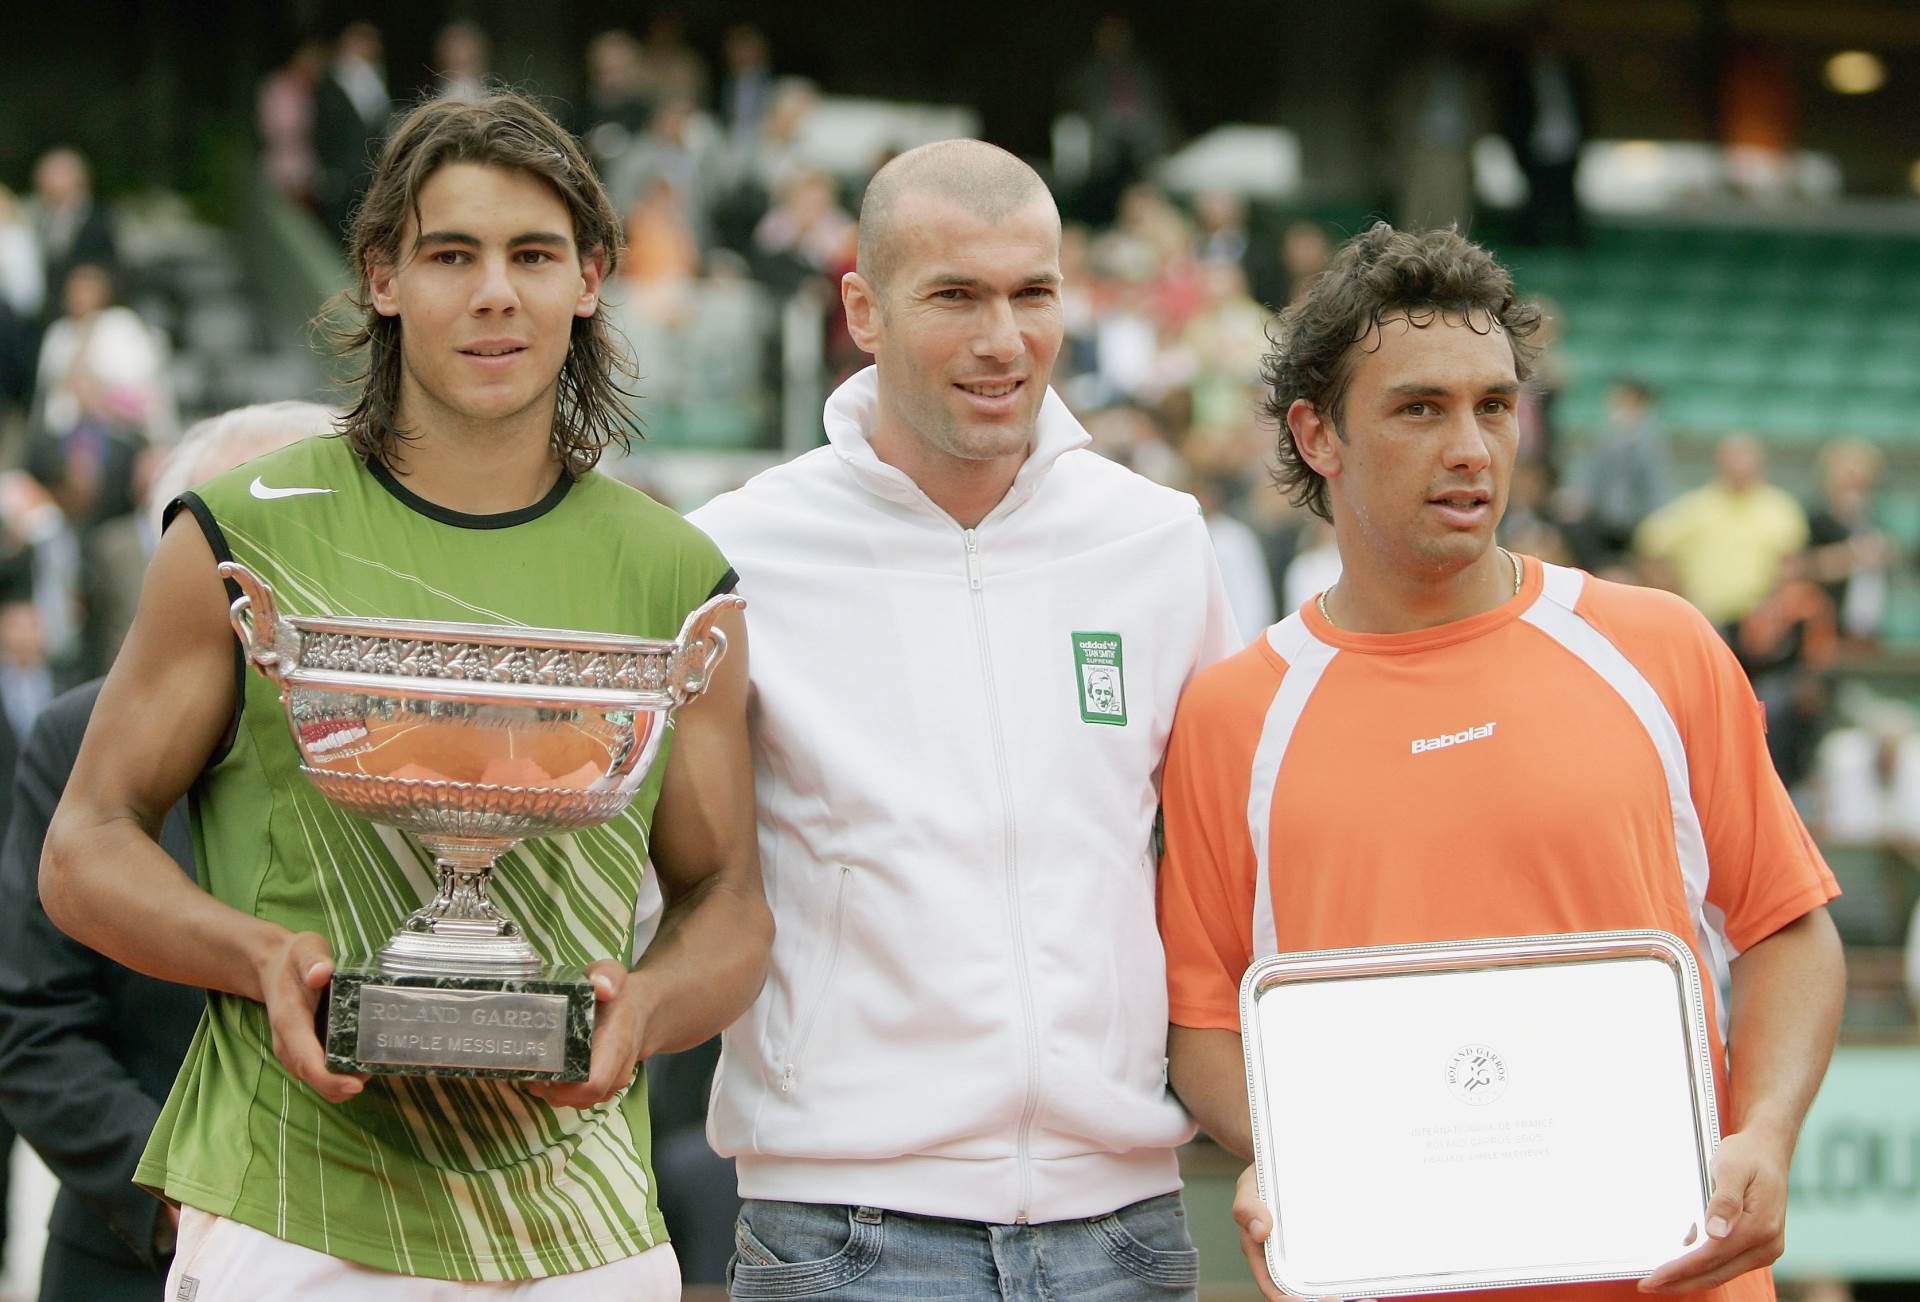  Finalista-Rolan-Garos-2005.-dopingovan-Marijano-Puerta-finale-Rafael-Nadal 